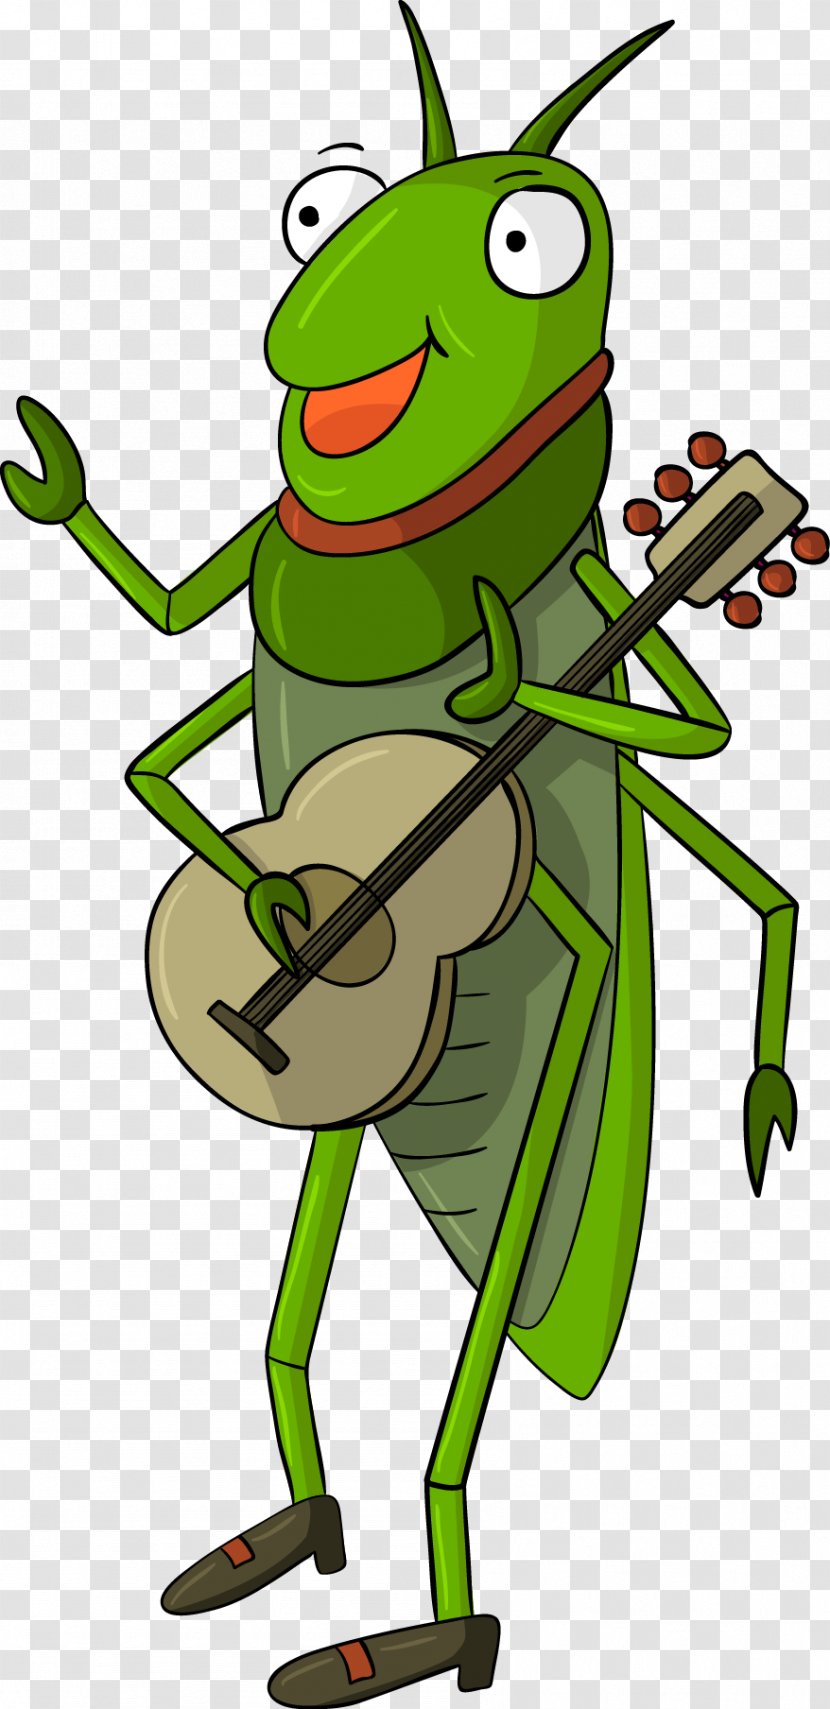 Insect Cricket Grasshopper Clip Art - Green - Vector Cartoon Illustration Playing Guitar Transparent PNG